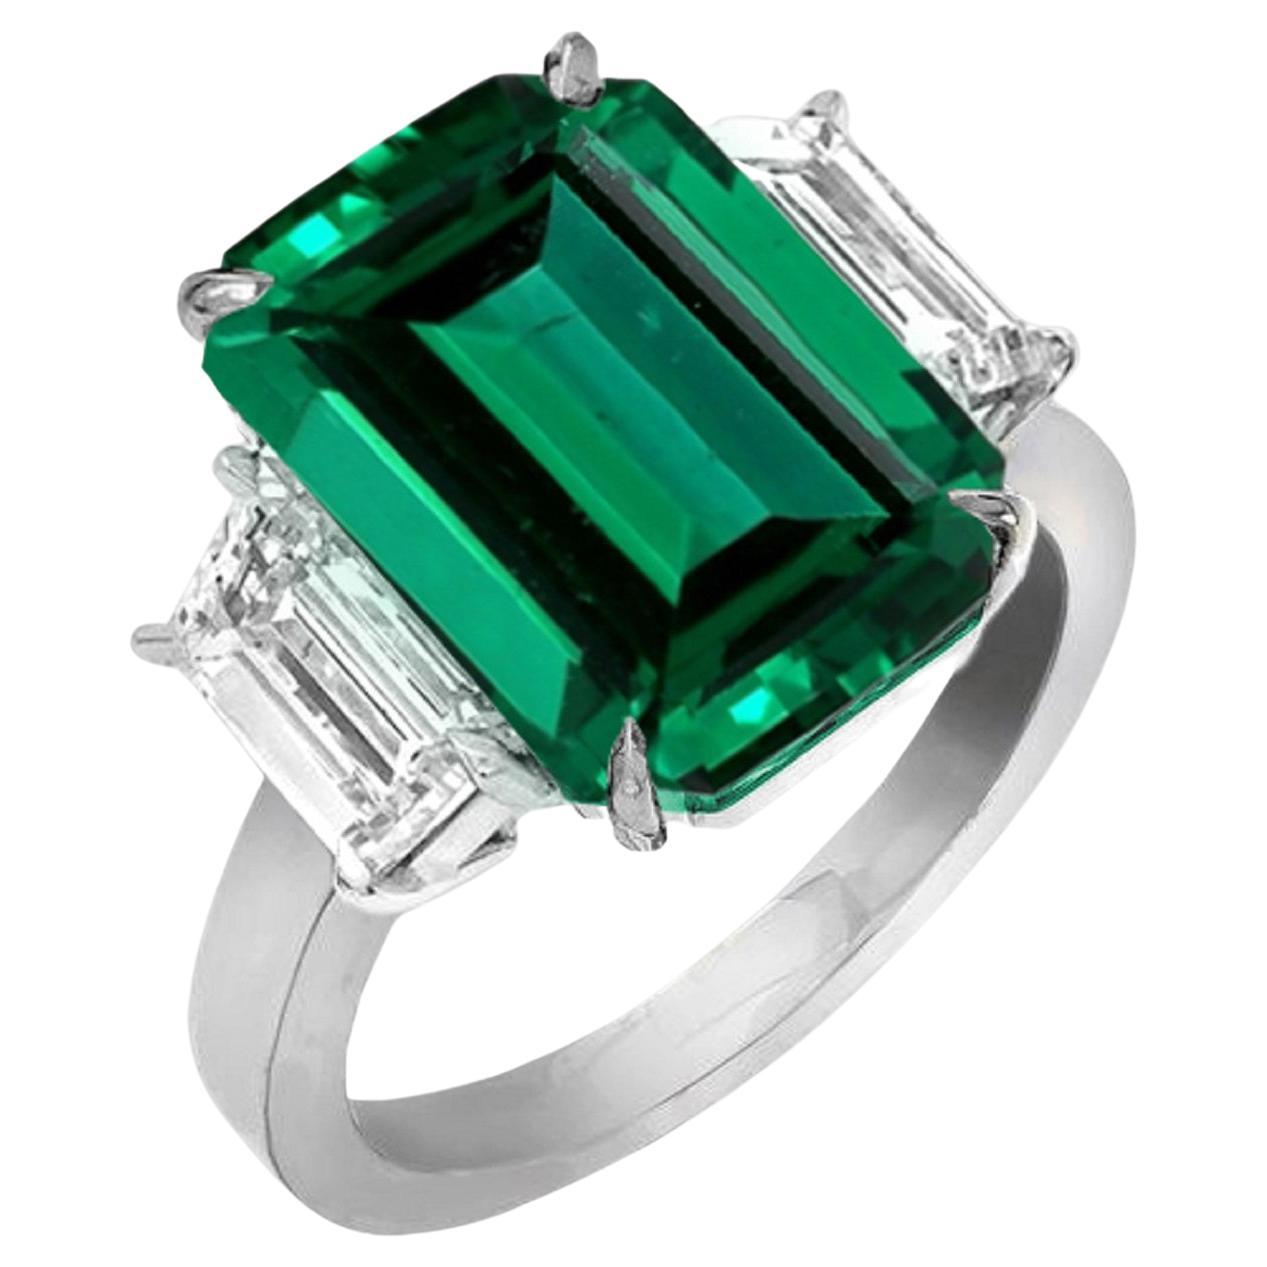 Handmade in Italy GIA Certified 4 Carat Green Emerald Diamond Platinum Ring